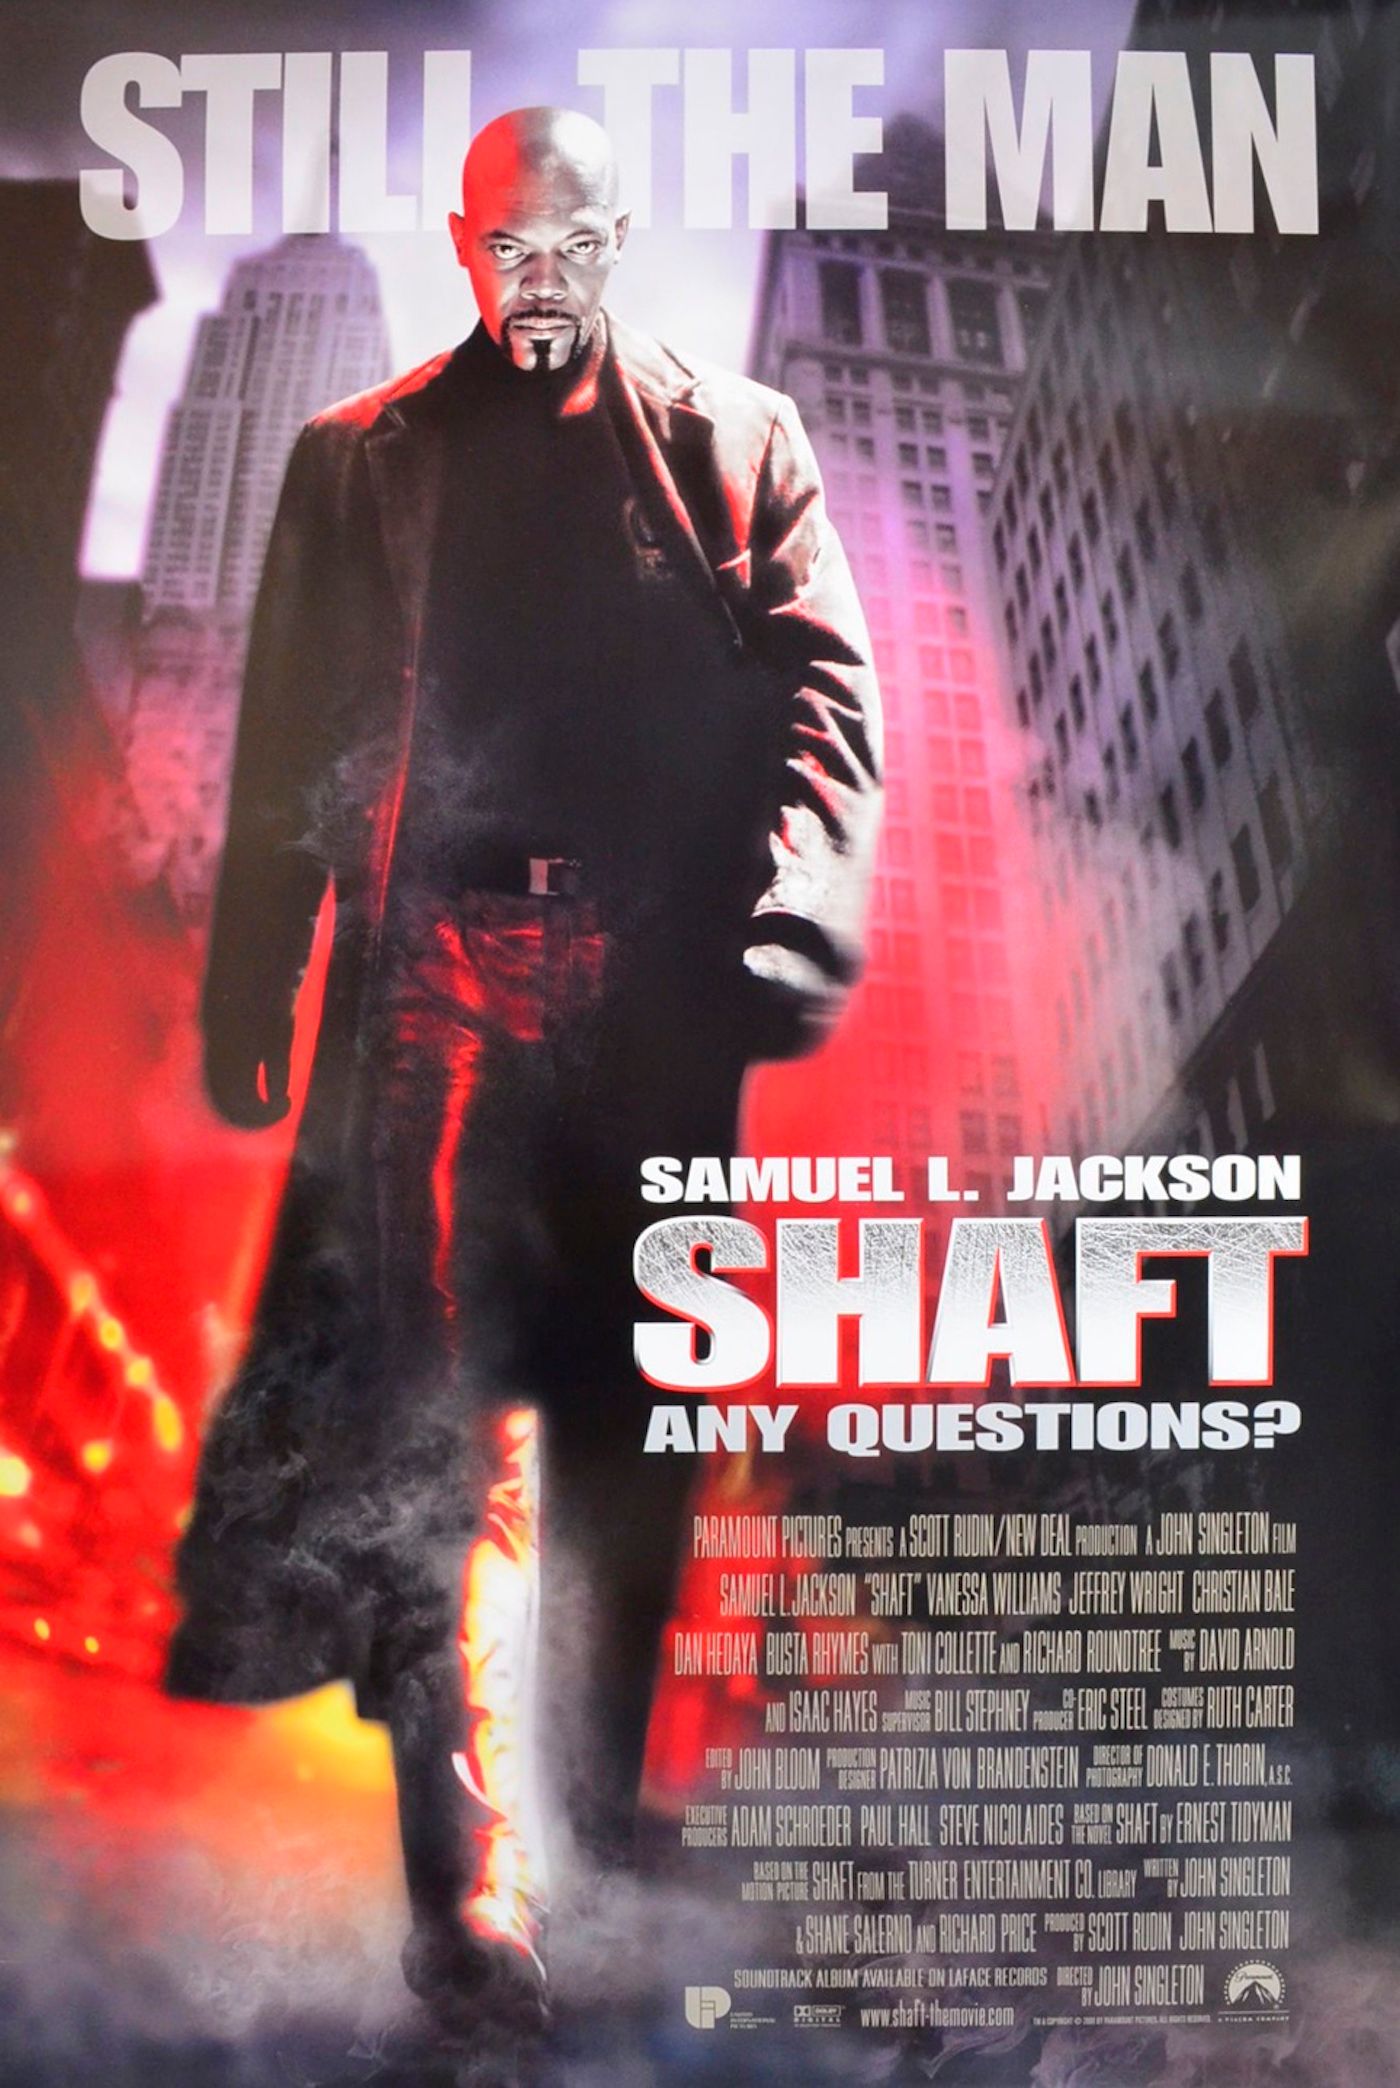 Samuel L. Jackson as Shaft in Shaft (2000)